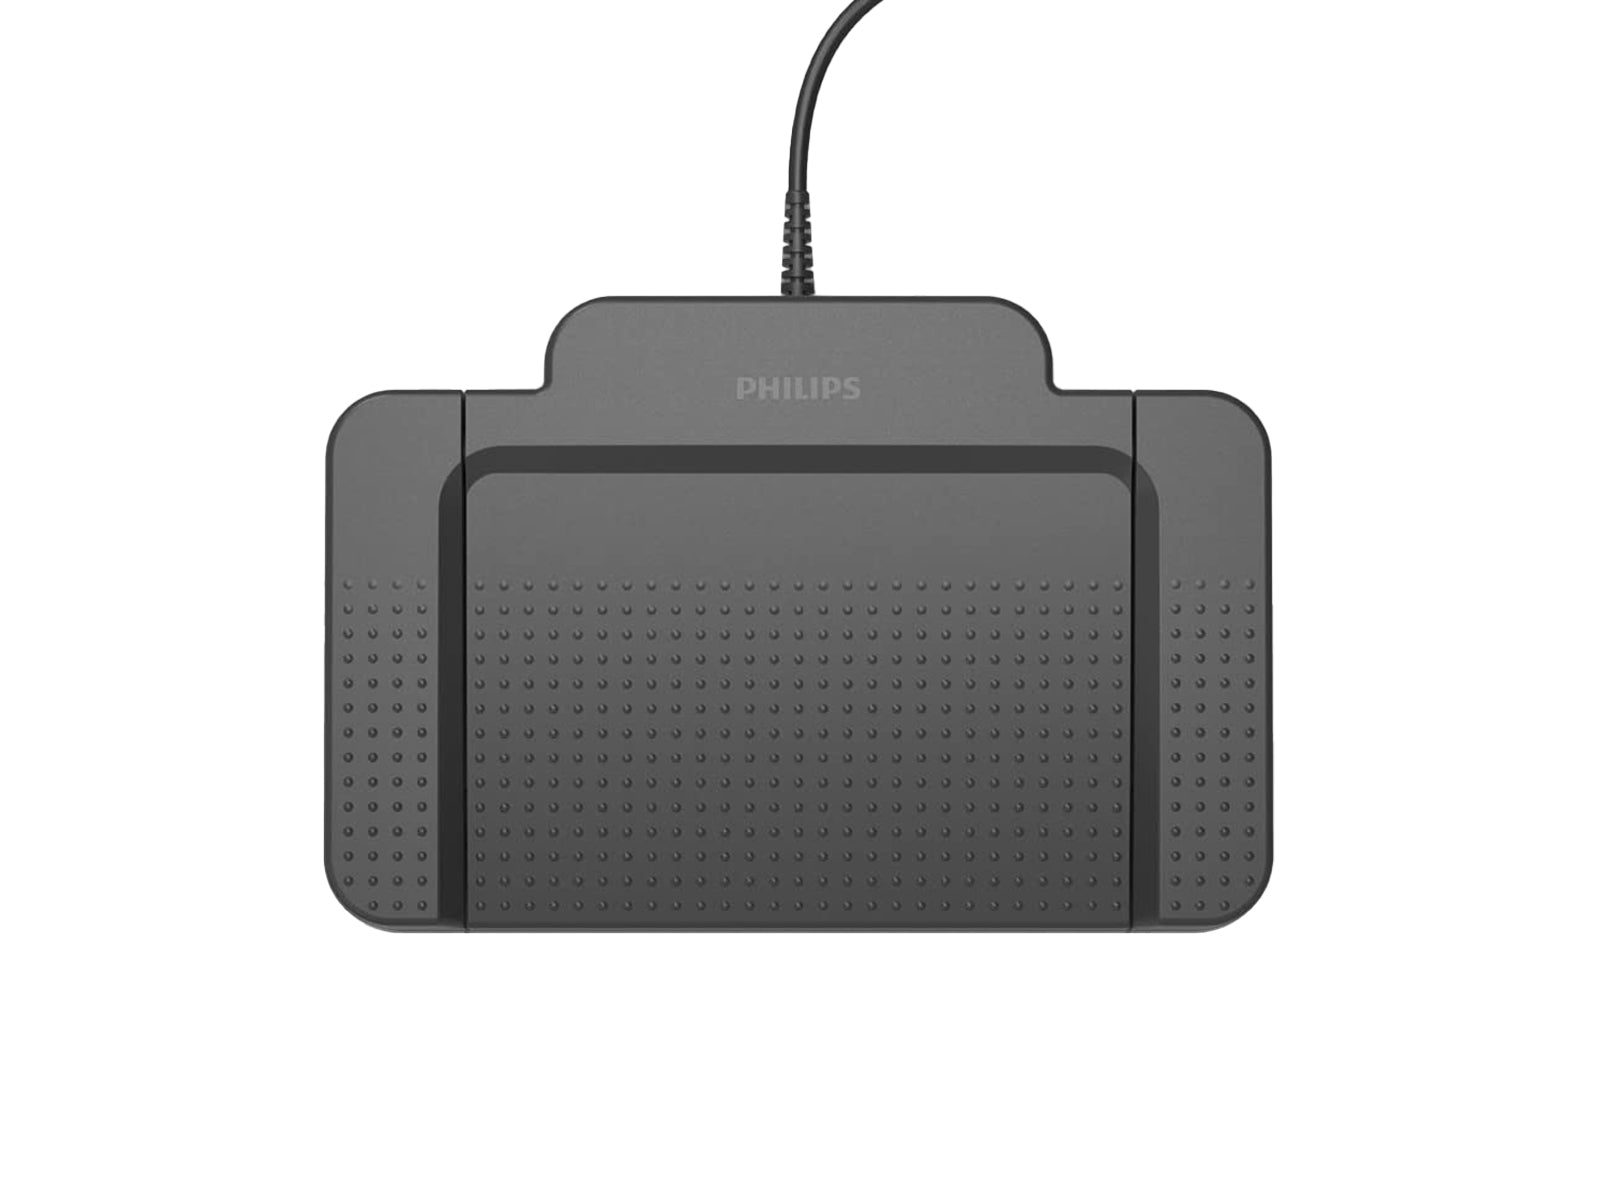 Philips Control de pie de transcripción USB de 3 pedales (ACC2320) Monitors.com